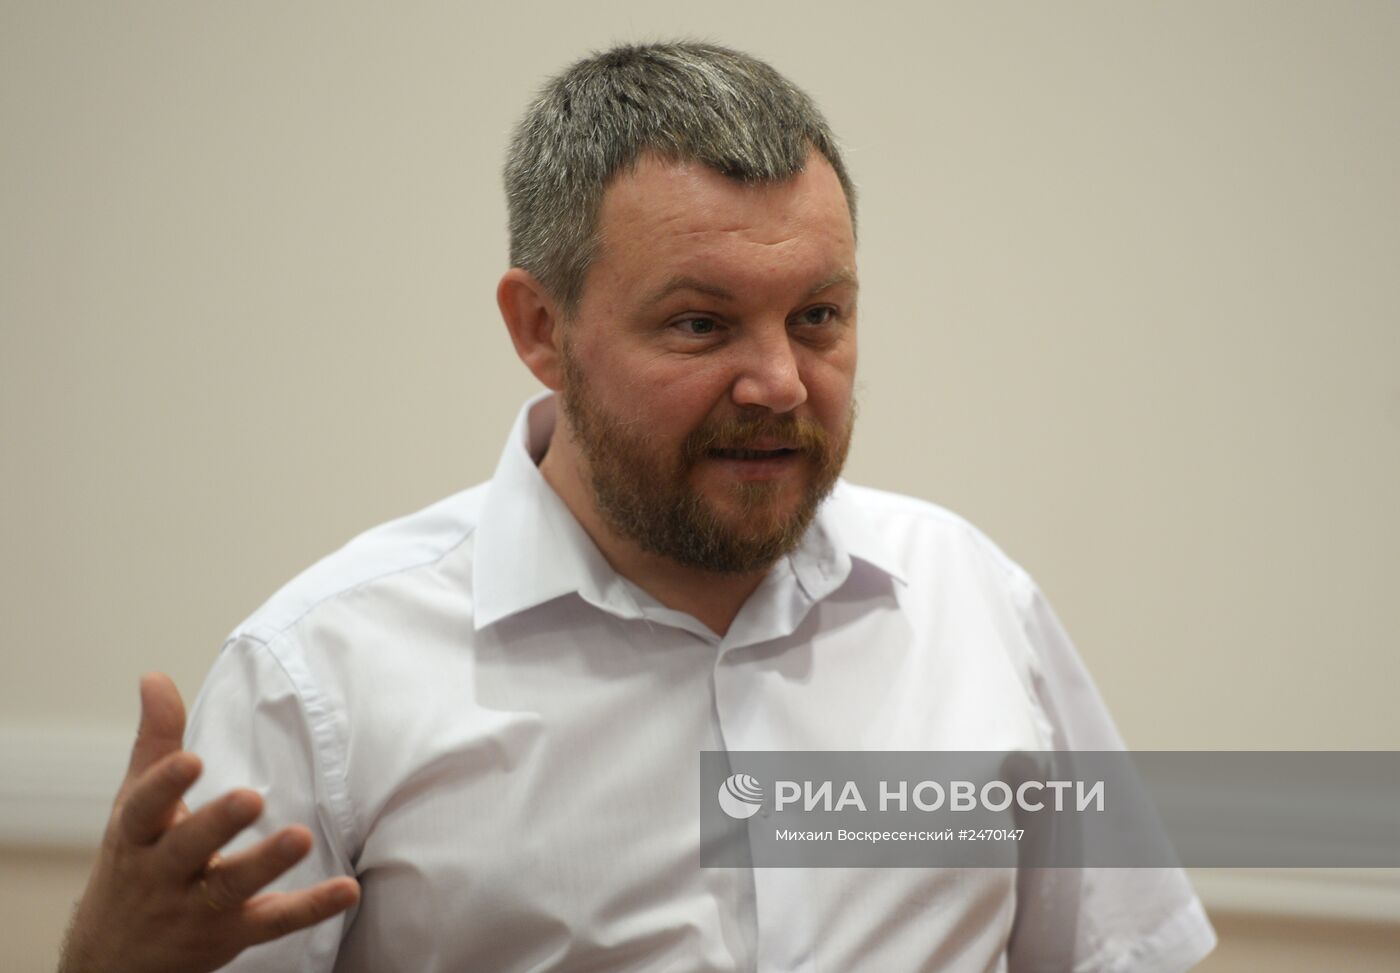 Пресс-конференция Андрея Пургина